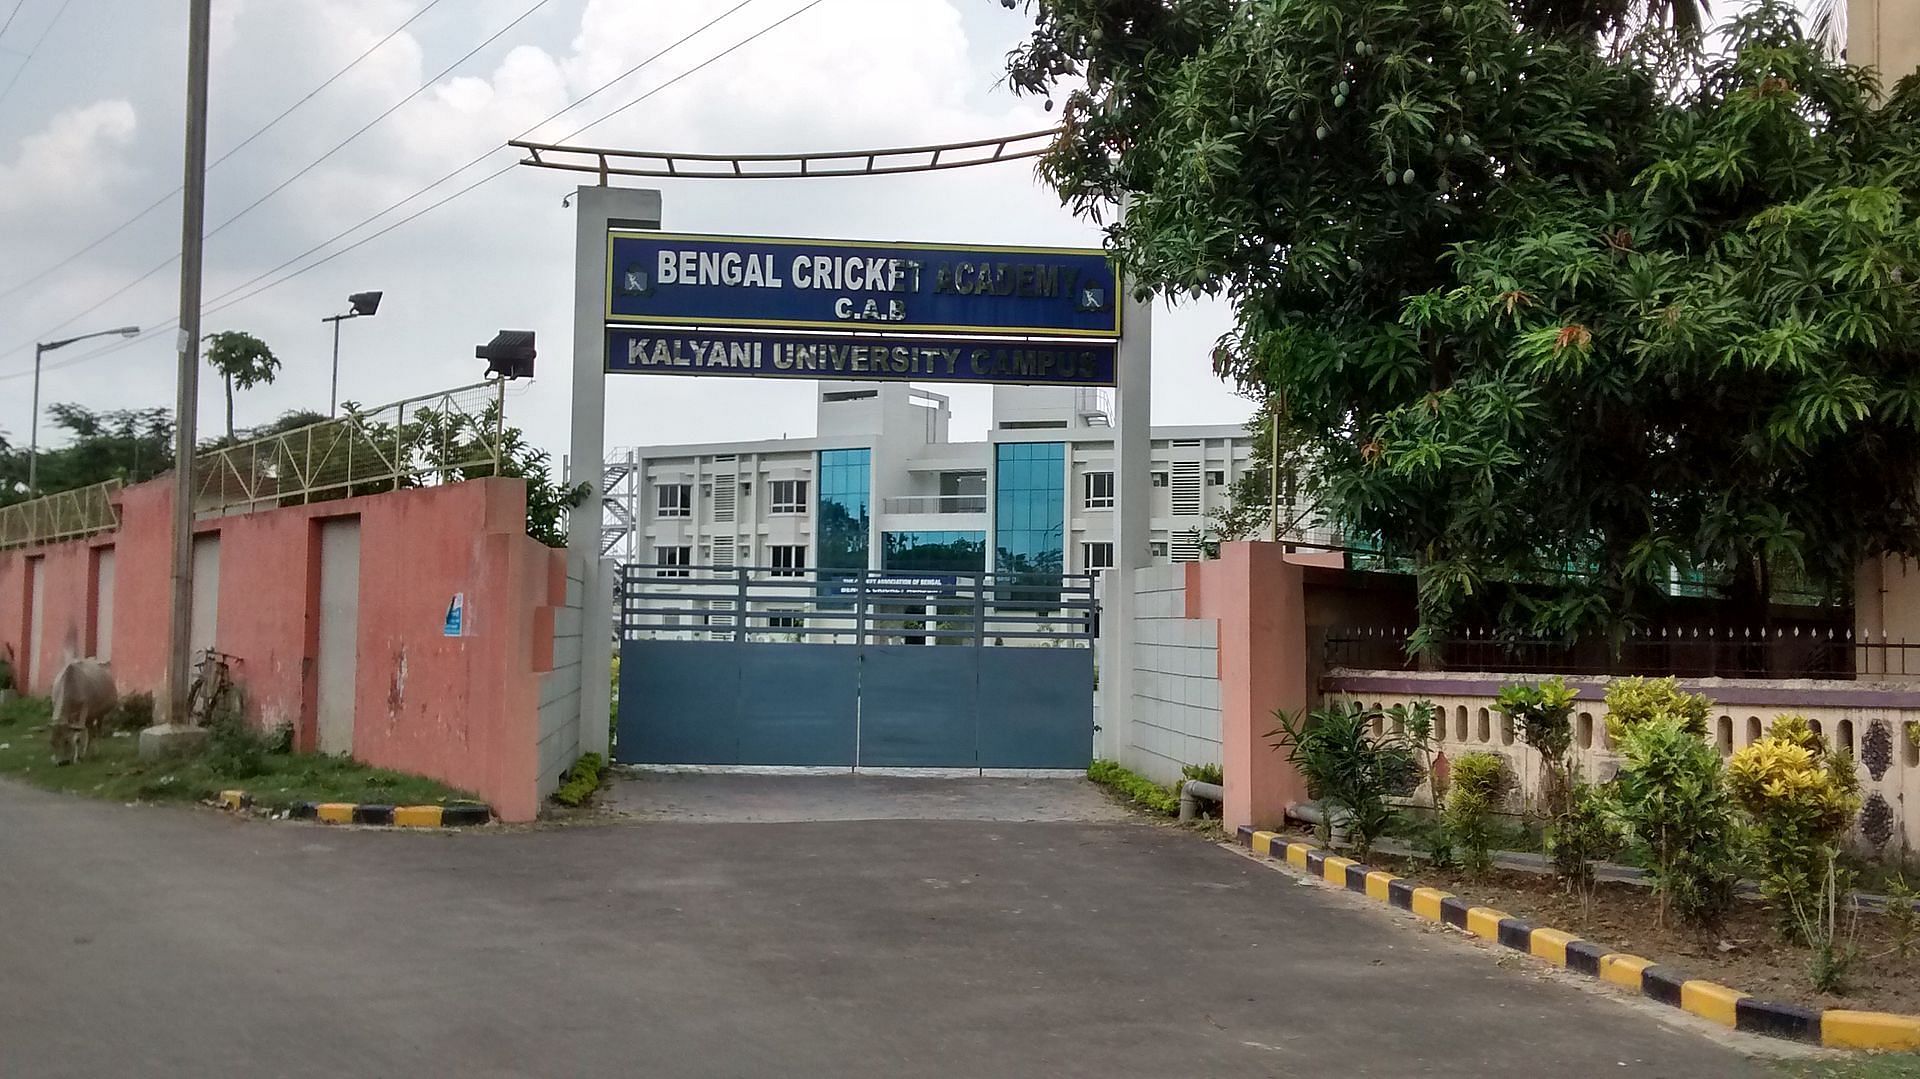 The BCA Academy in Kalyani (Source: Wikipedia)